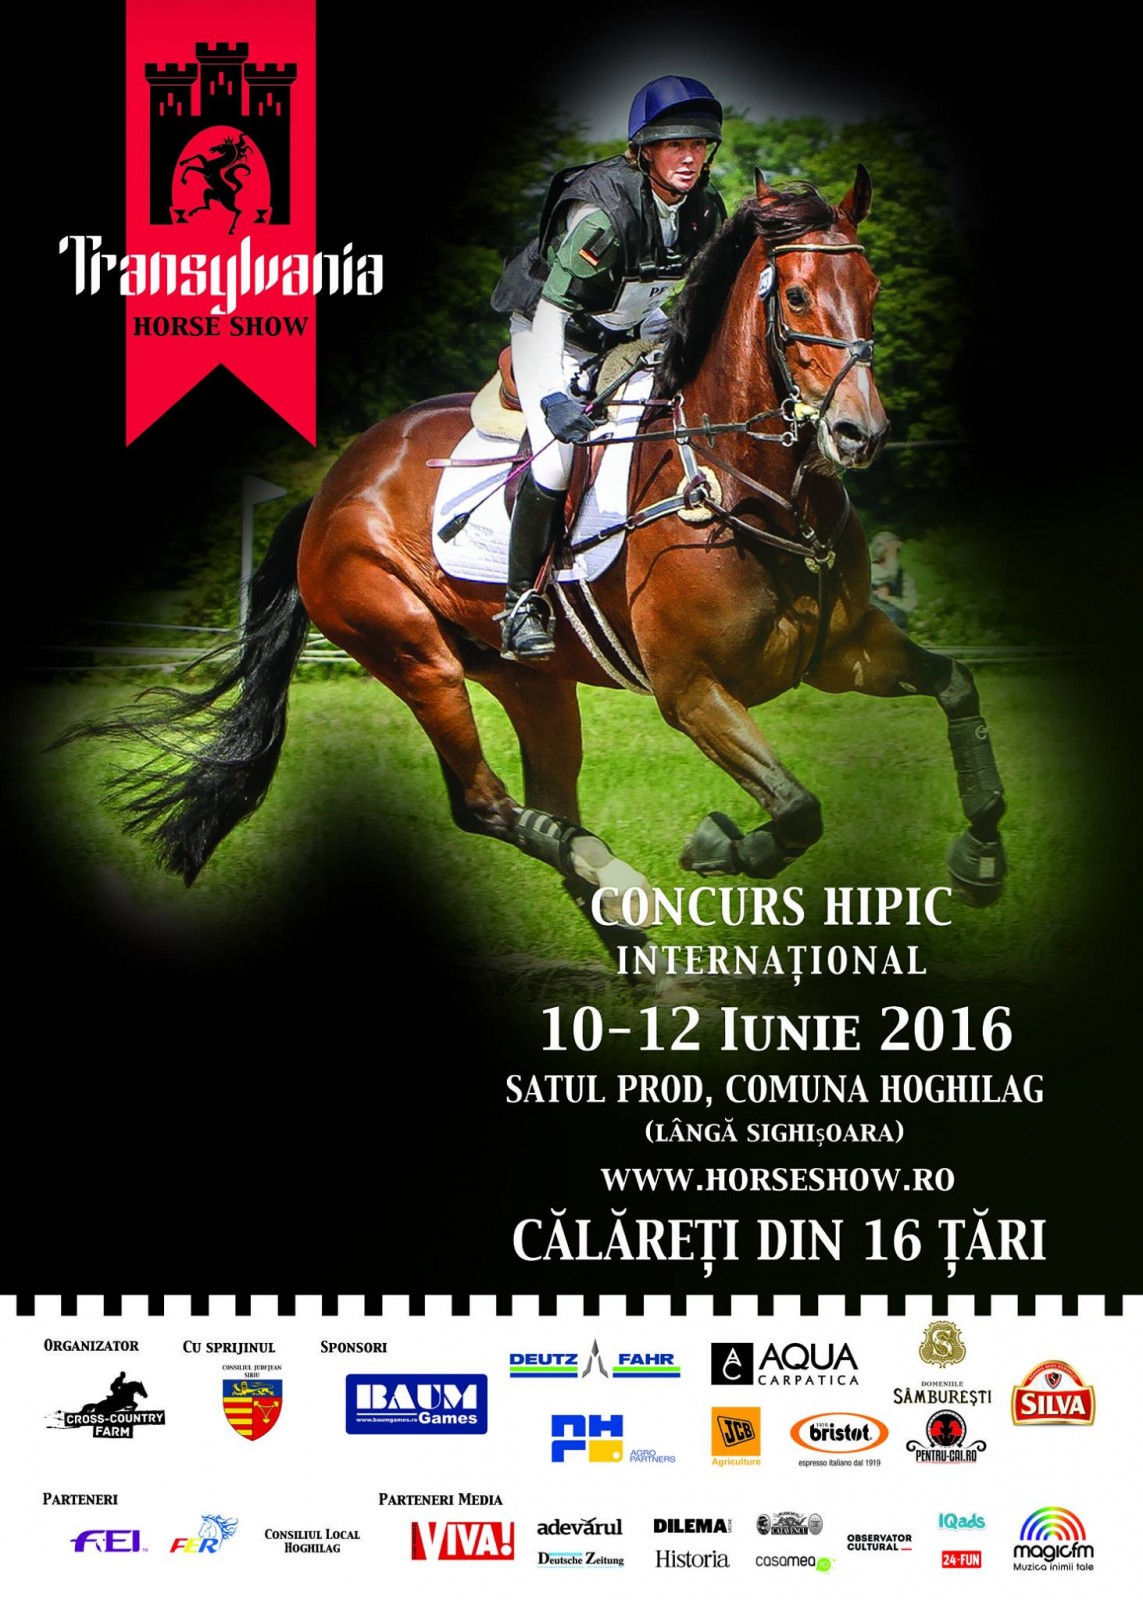 Transylvania Horse Show 2016